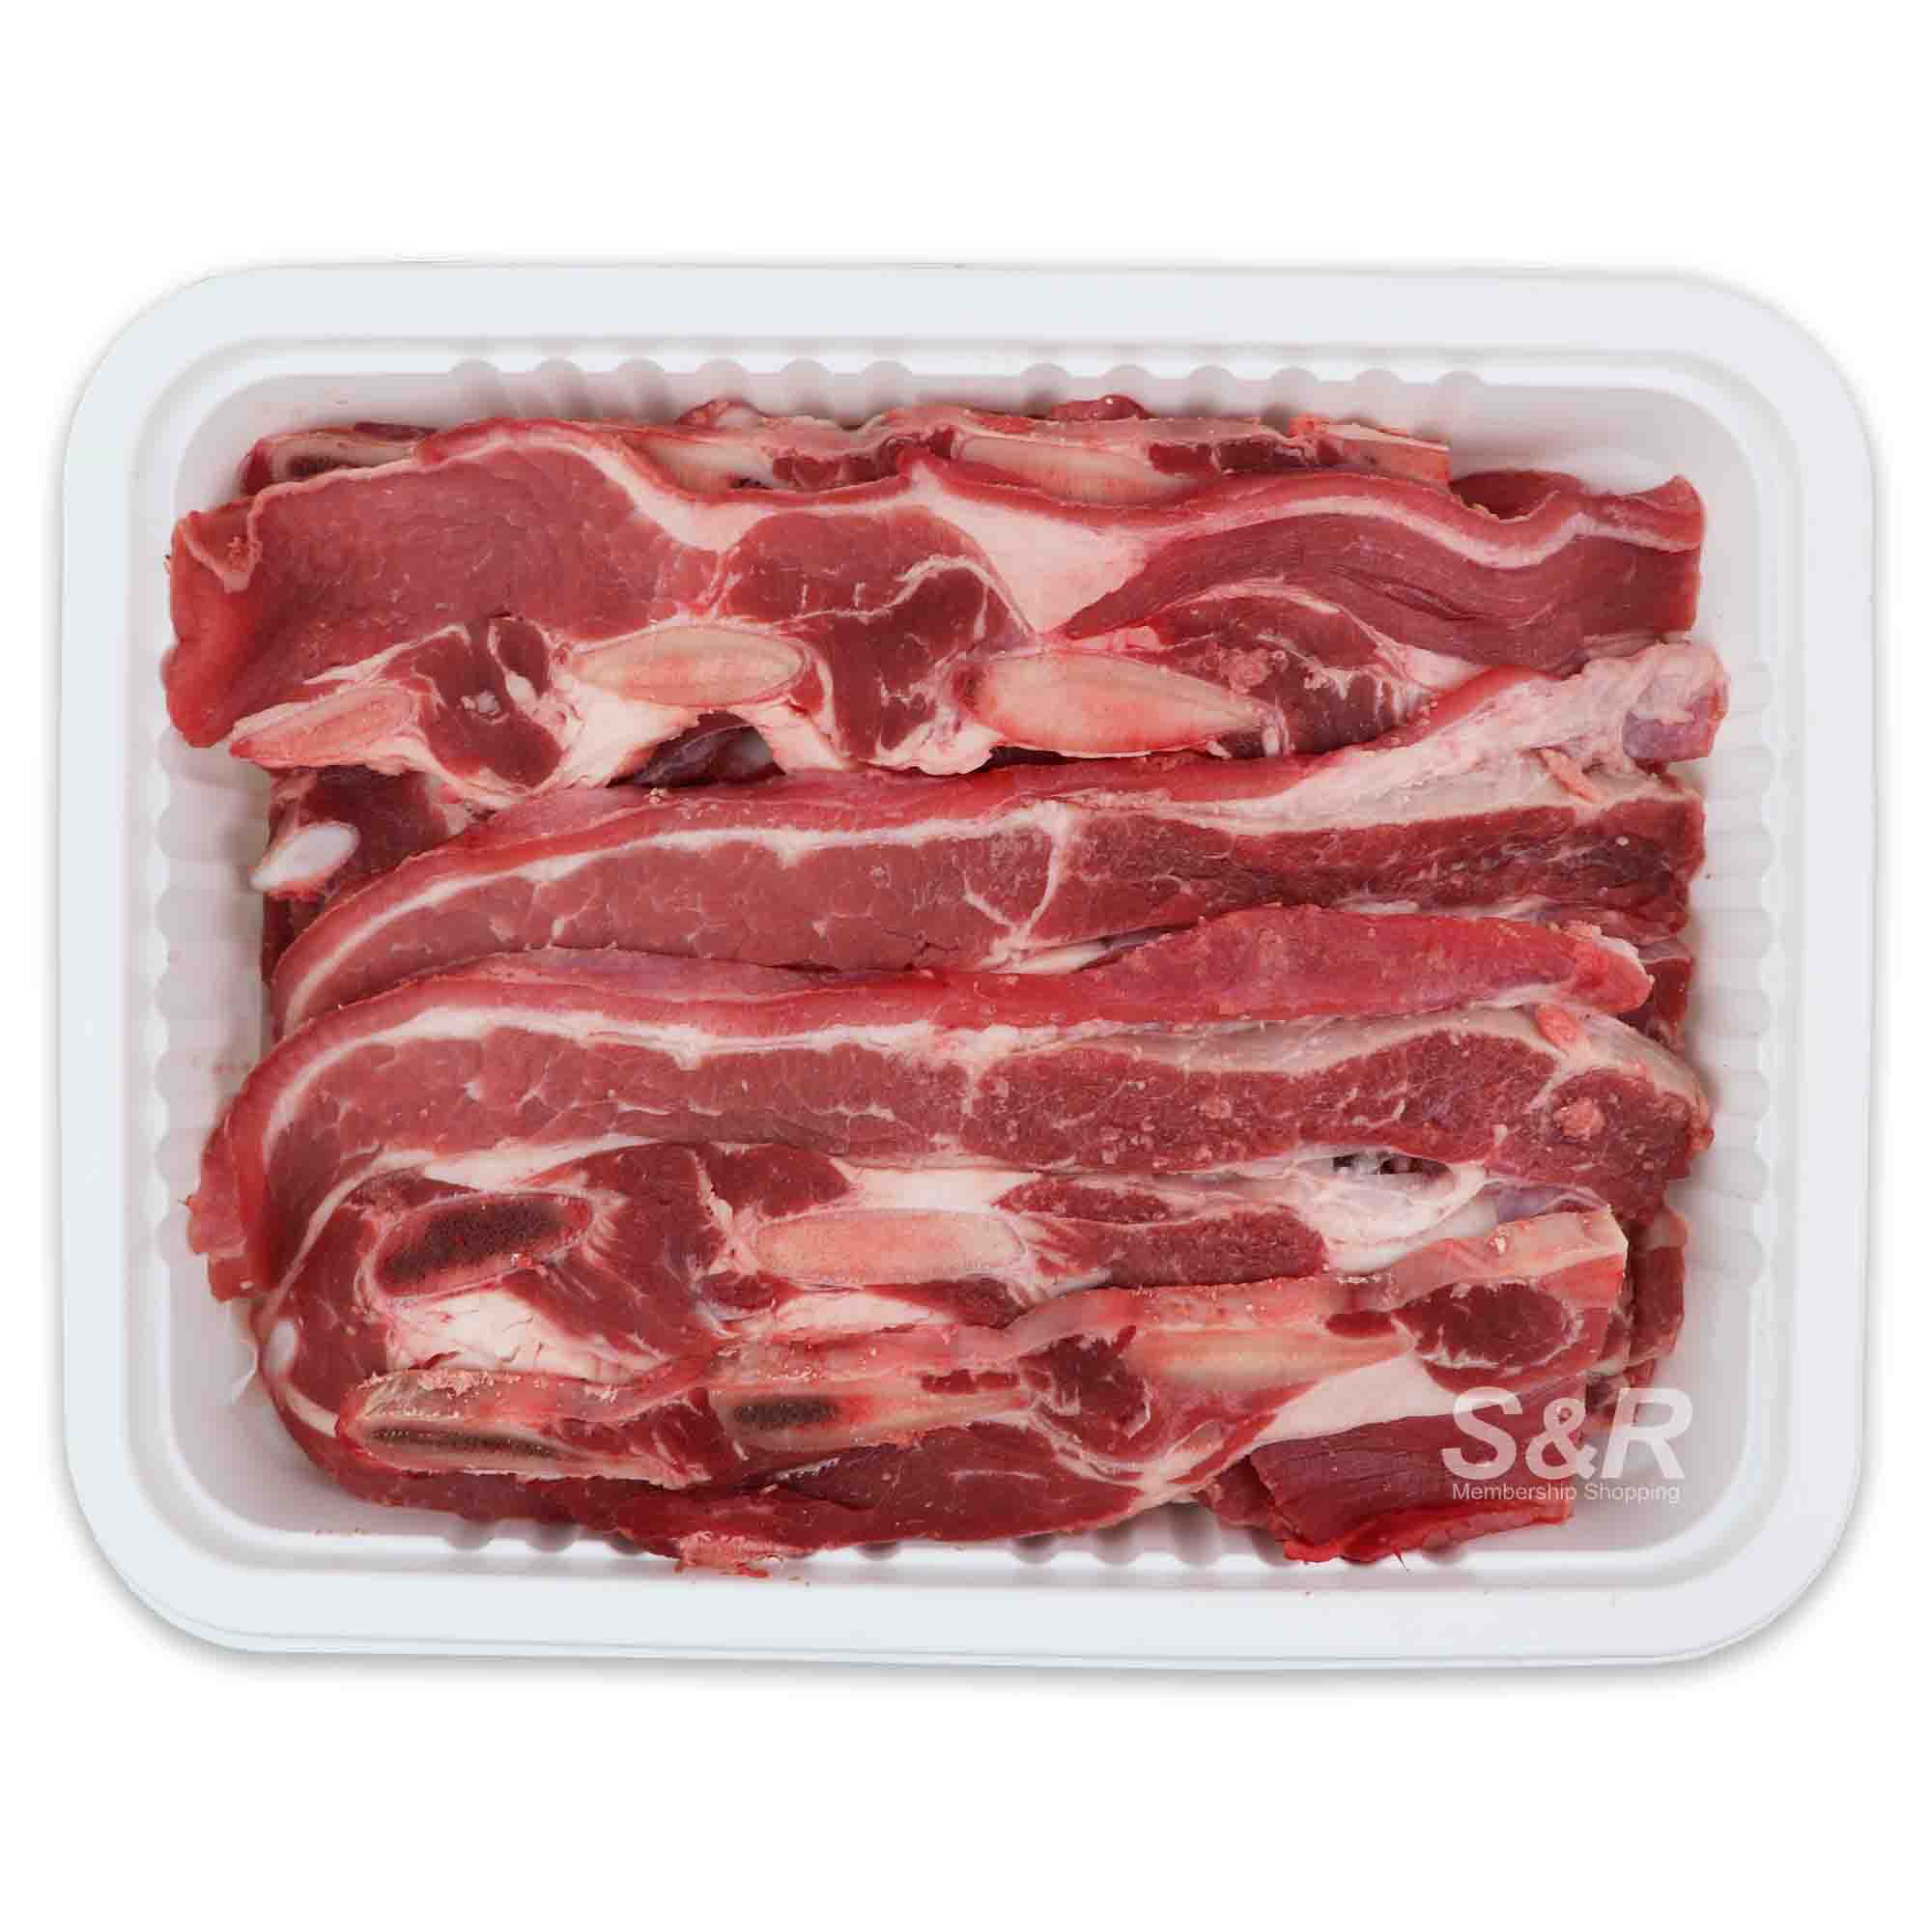 S&R Korean Beef Galbi approx. 2kg